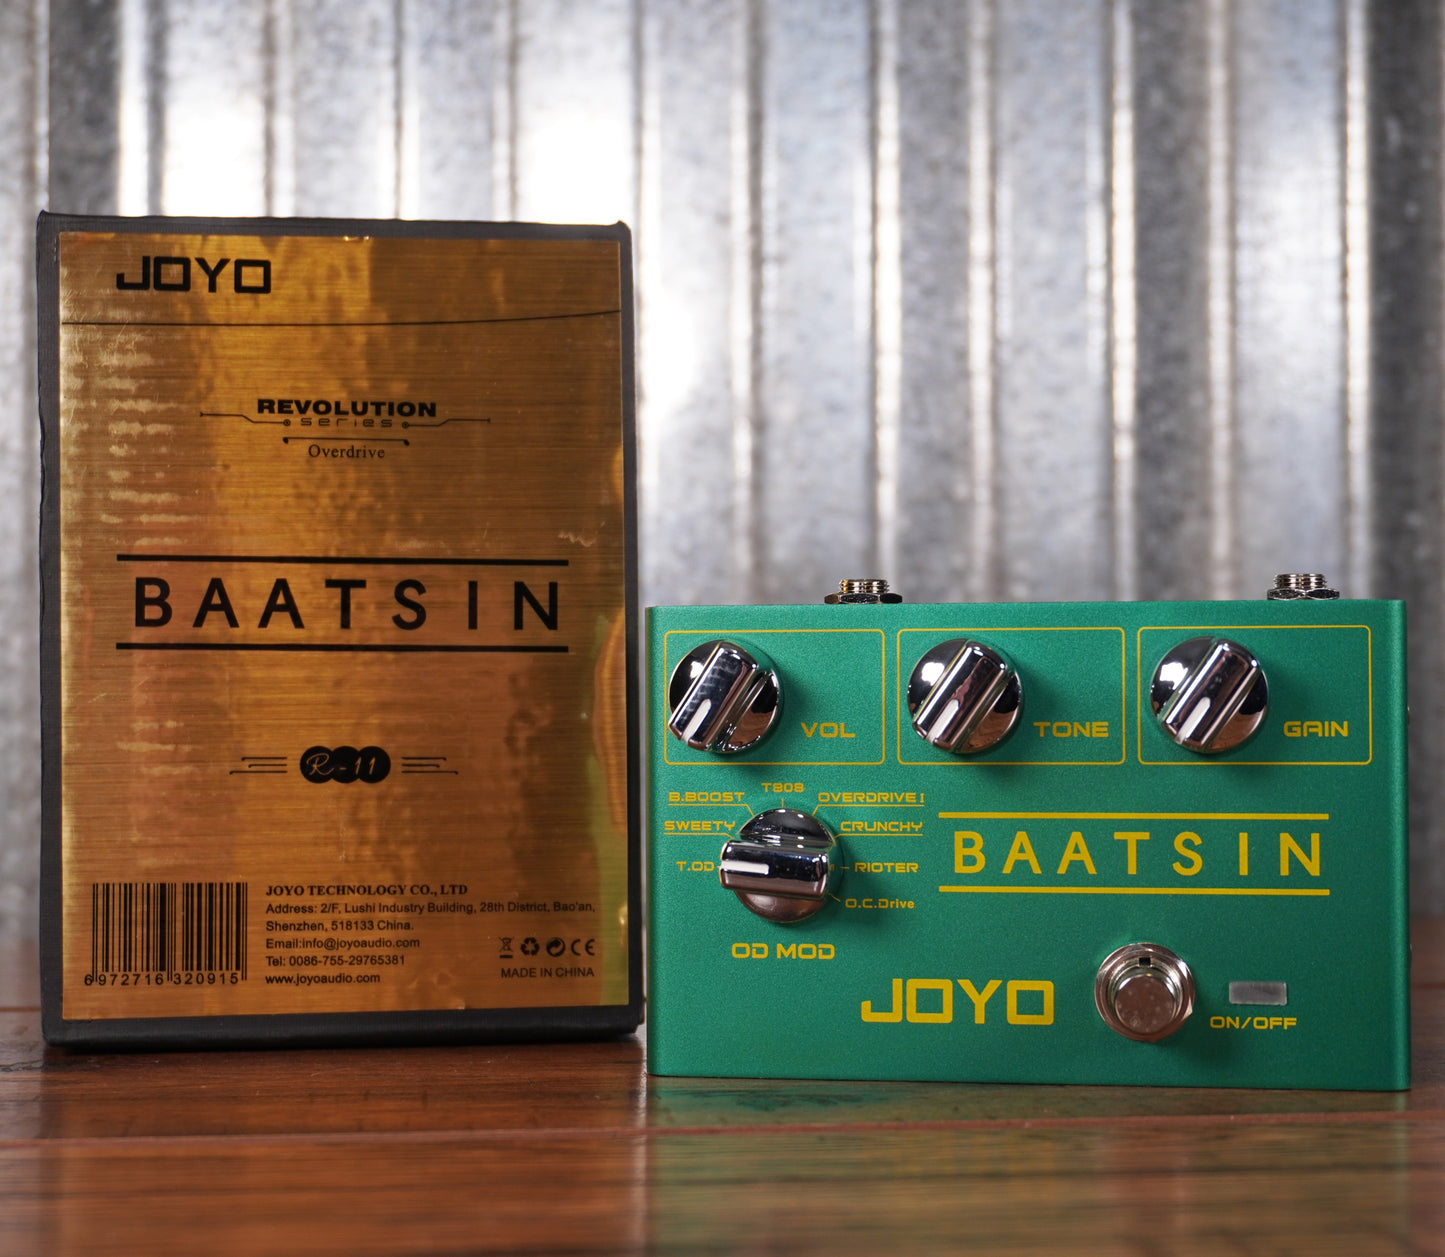 JOYO R-11 Baatsin Overdrive Distortion Guitar Effect Pedal